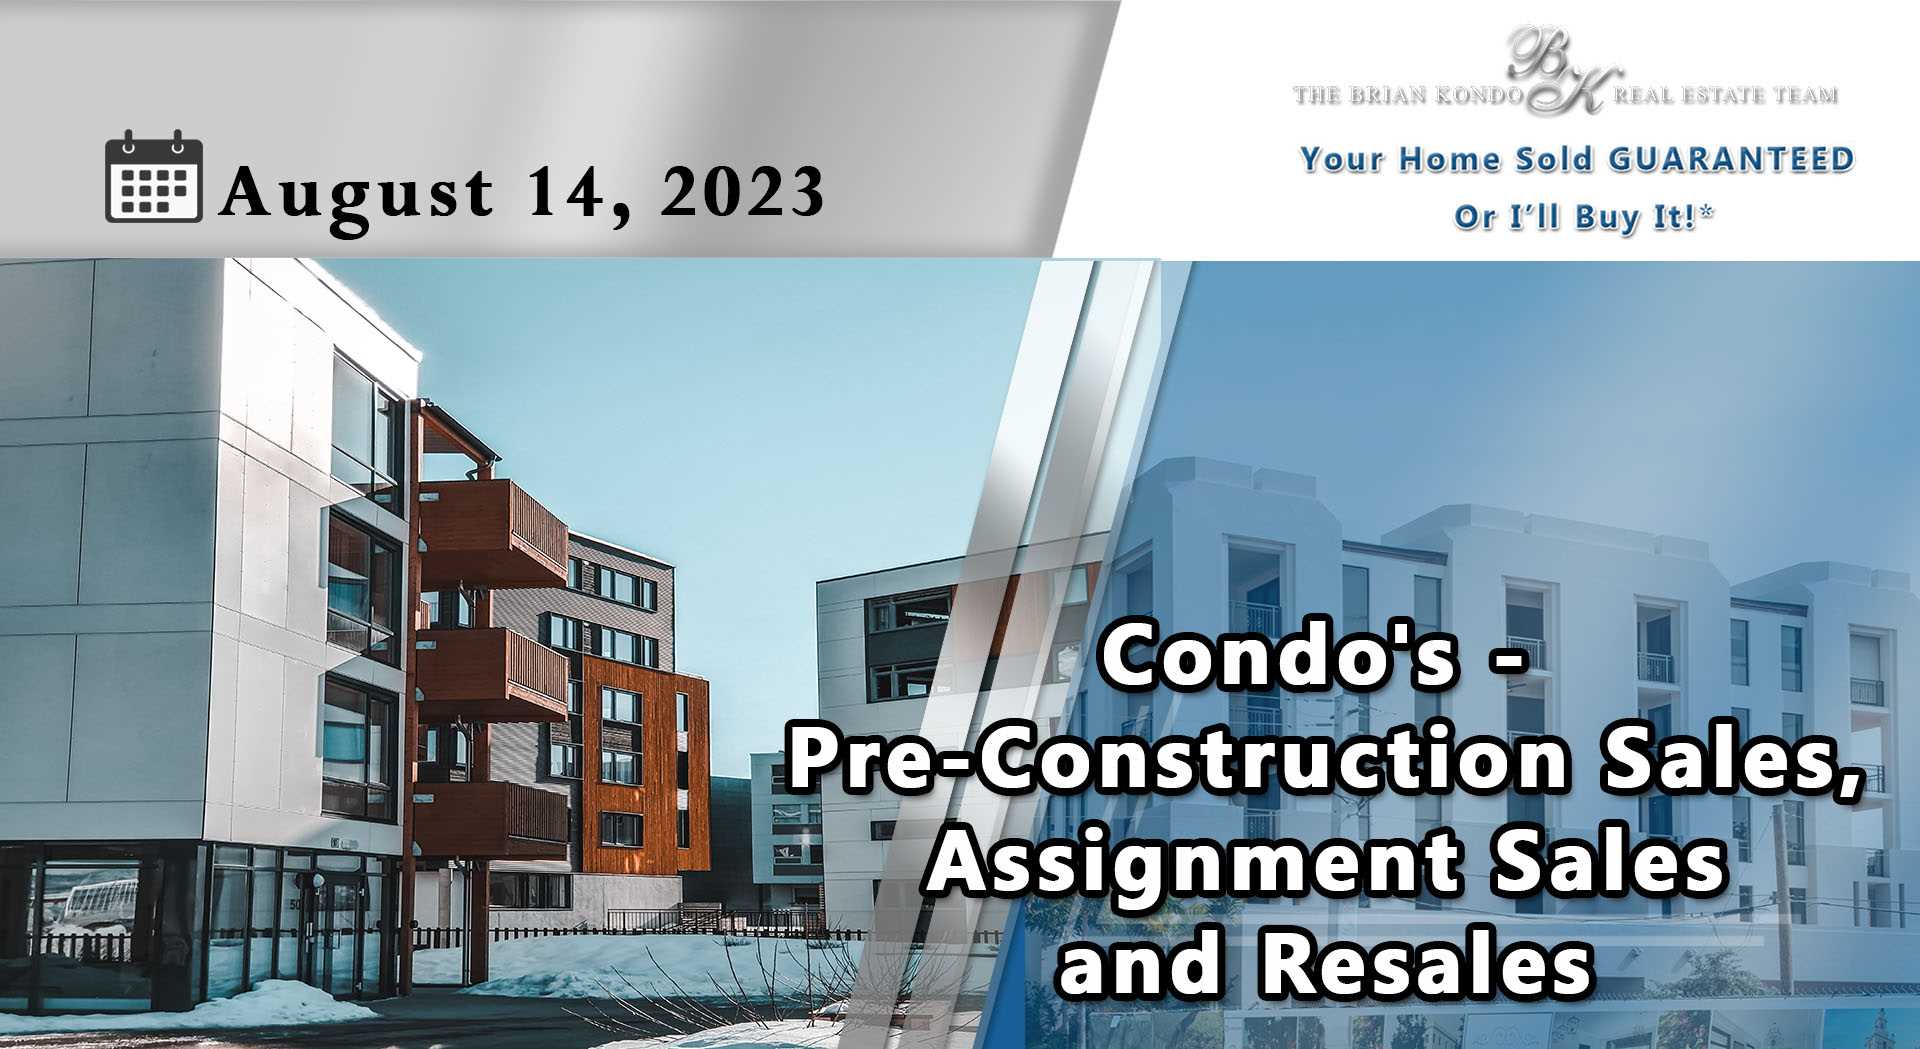 Condo's - Pre-Construction Sales, Assignment Sales and Resales